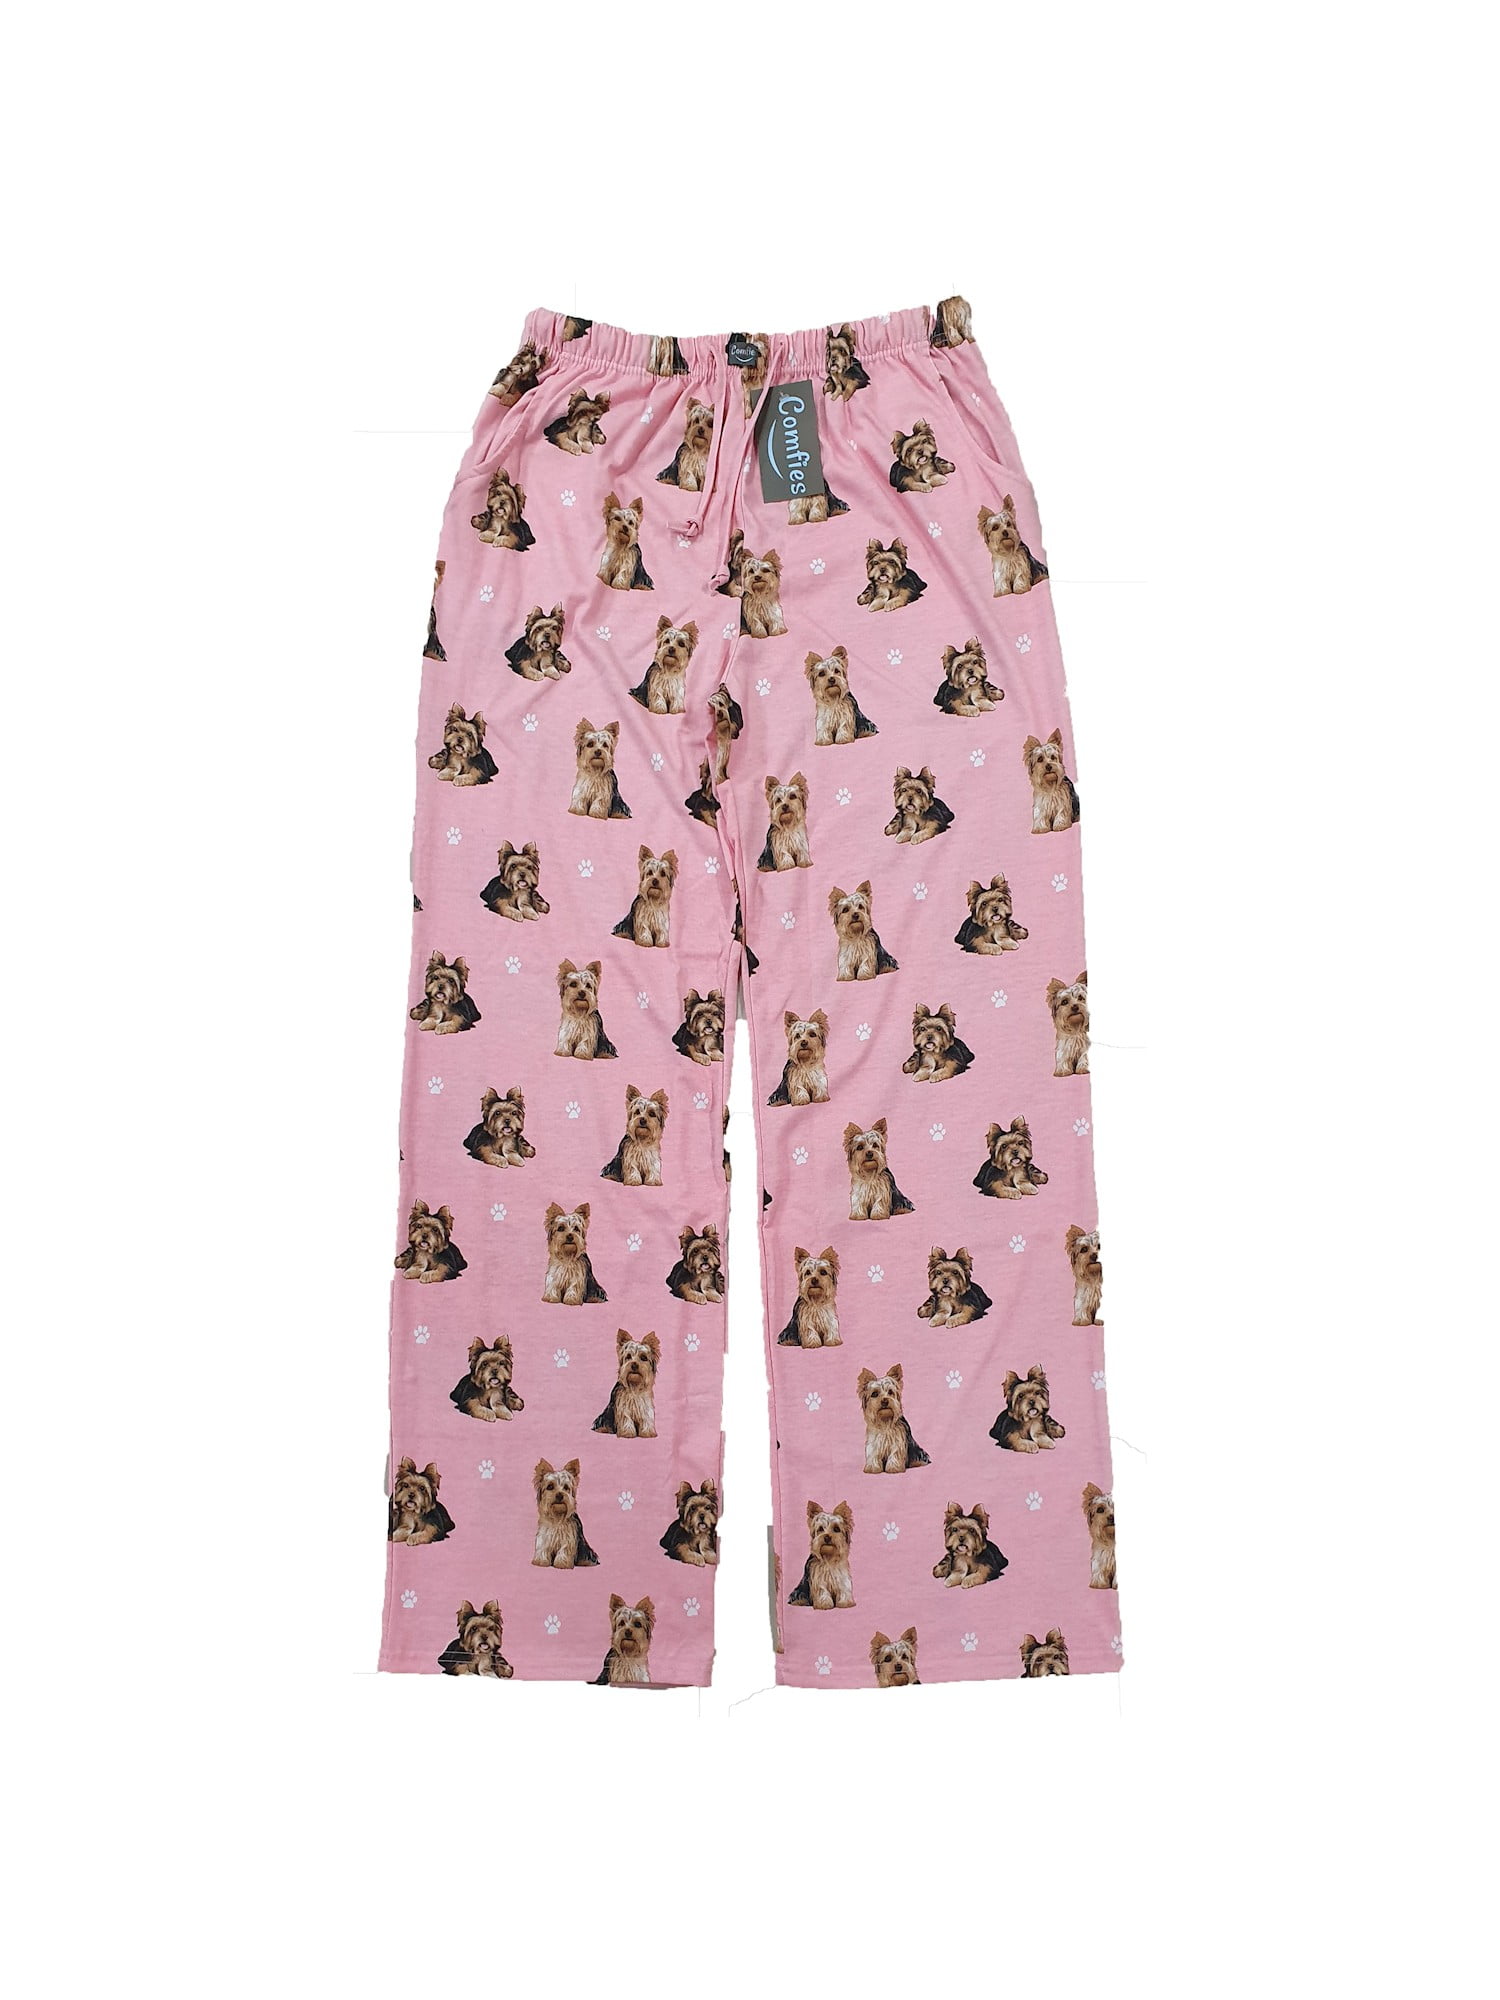 Womens Novelty Cotton Pajama Set Comfortable PJ Sleepwear CafePress Shiba Inu Mom